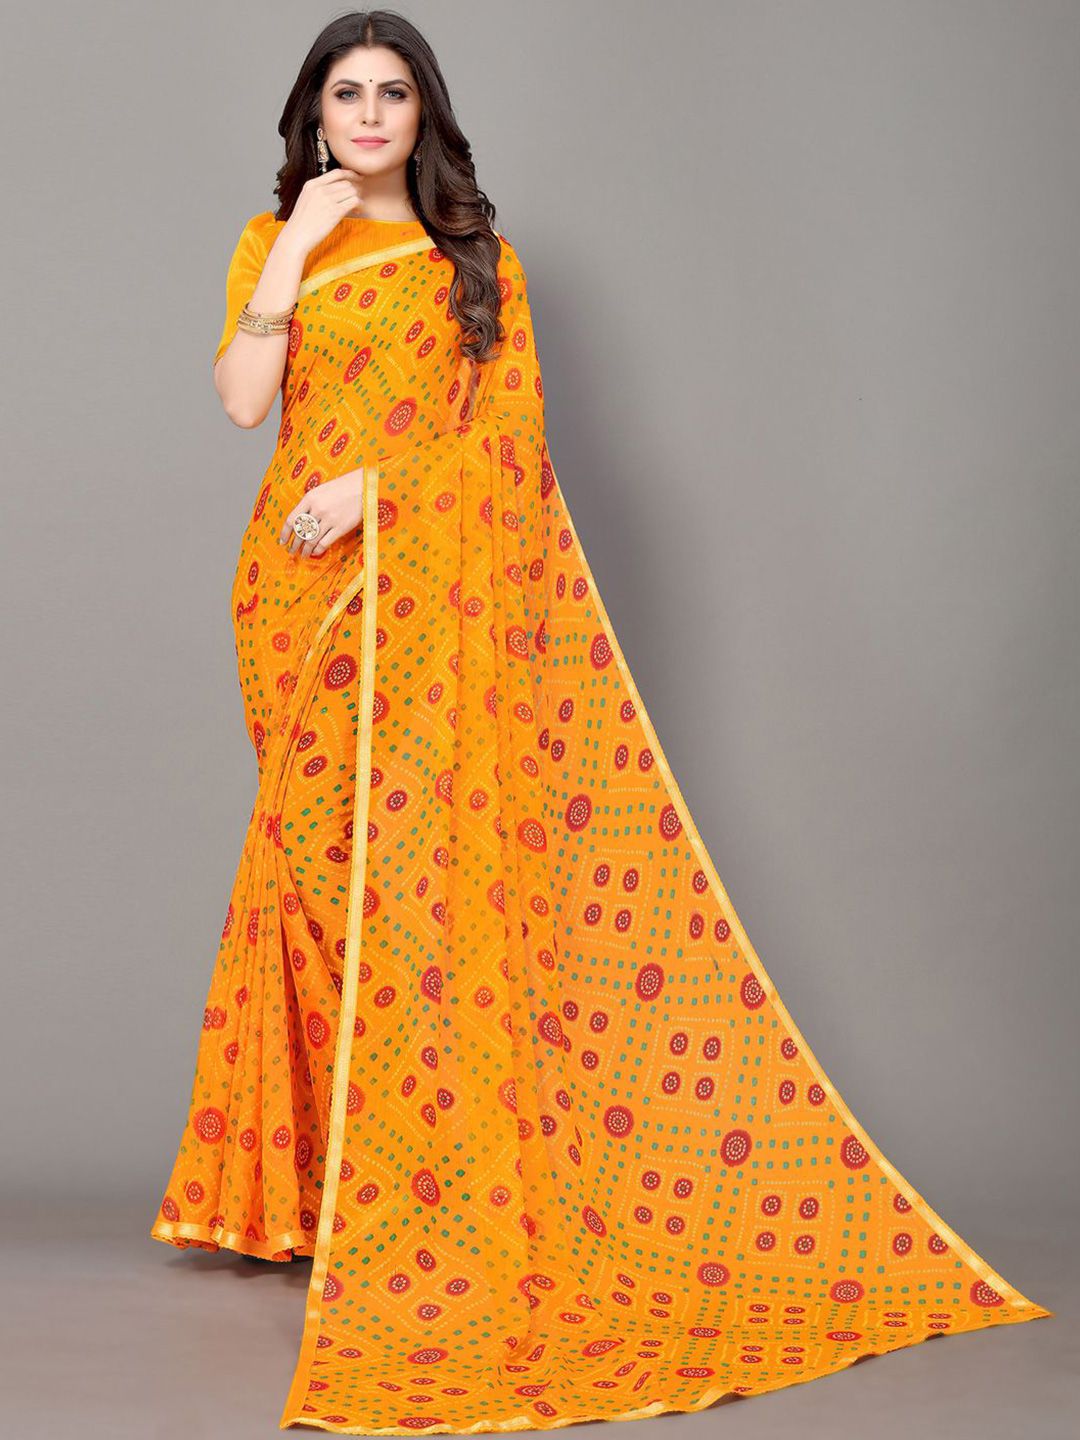 KALINI Yellow & Green Bandhani Saree Price in India